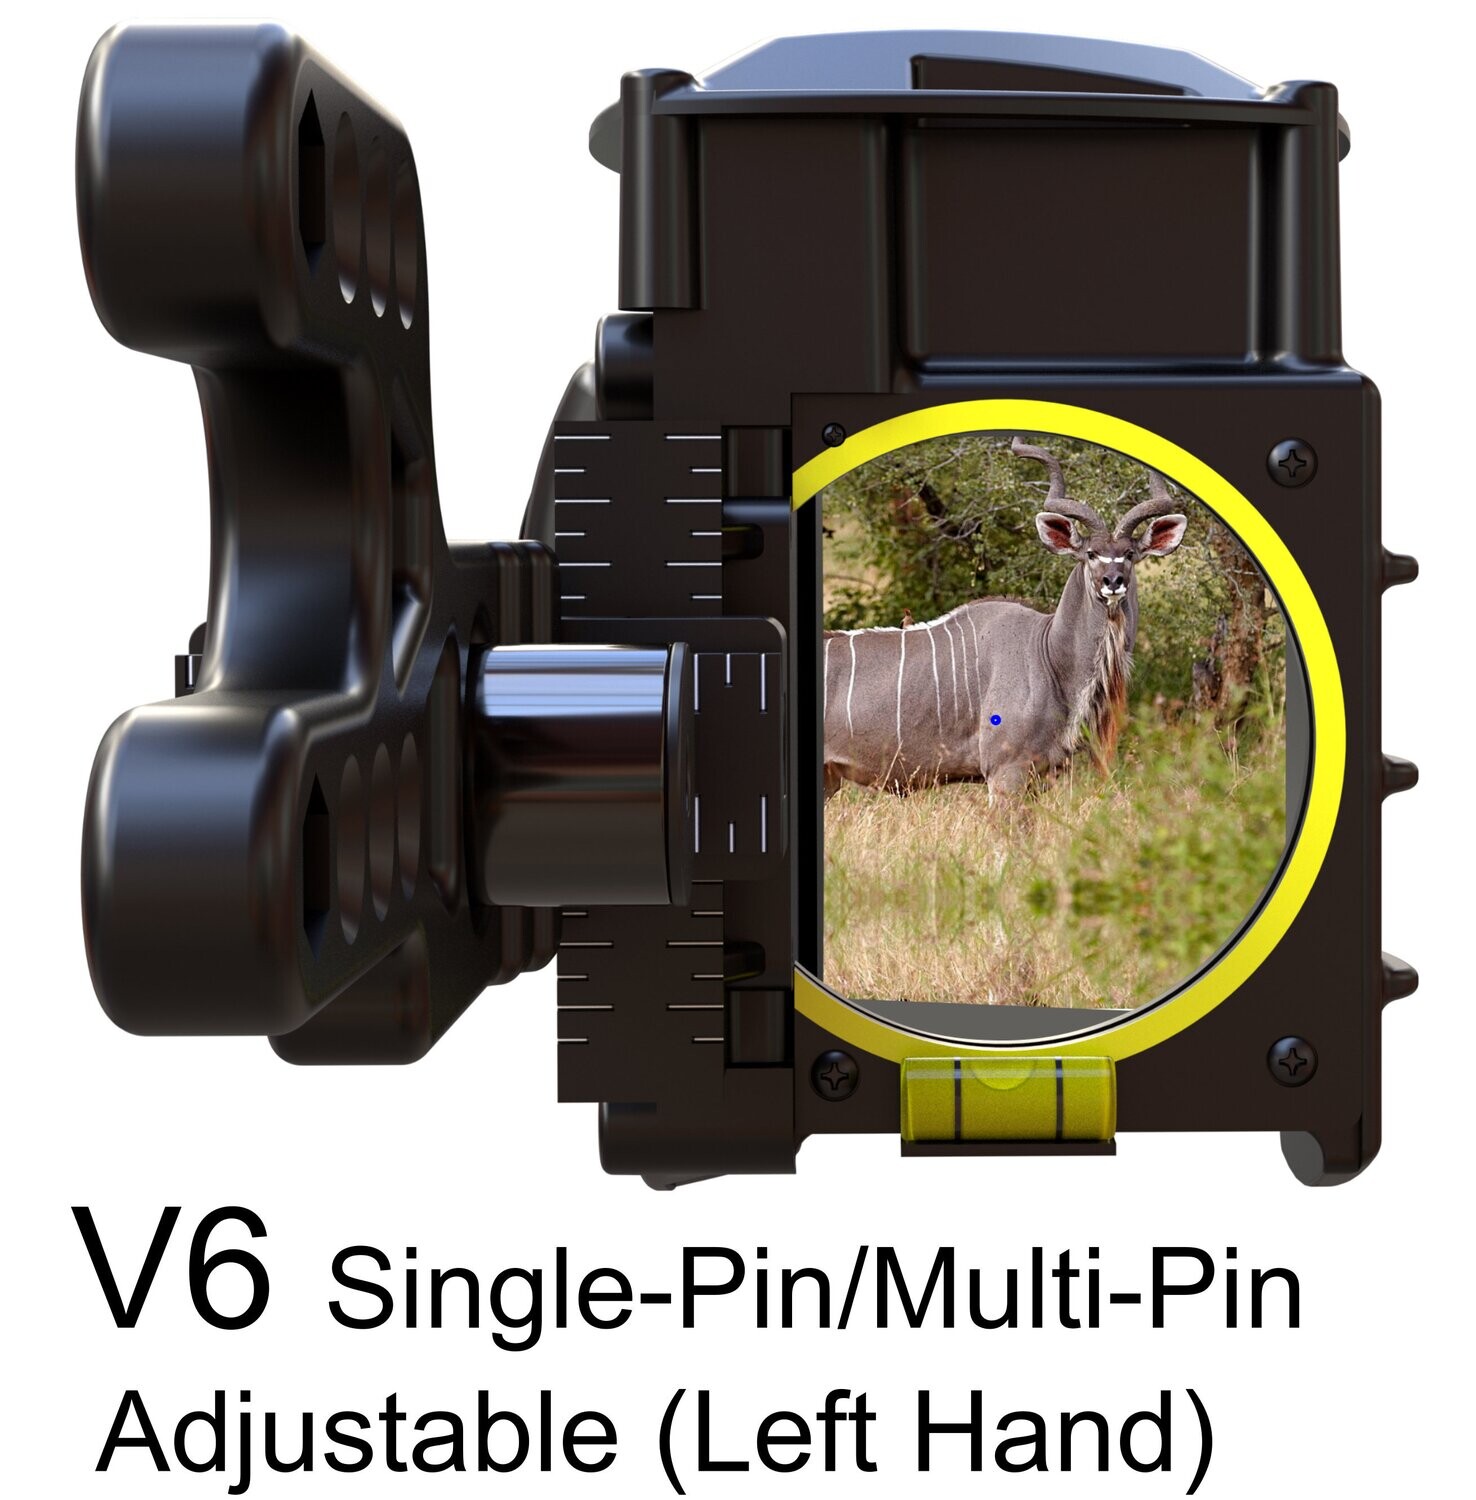 (Left Hand) Sure Sight V6 
Single-Pin/Multi-Pin Adjustable